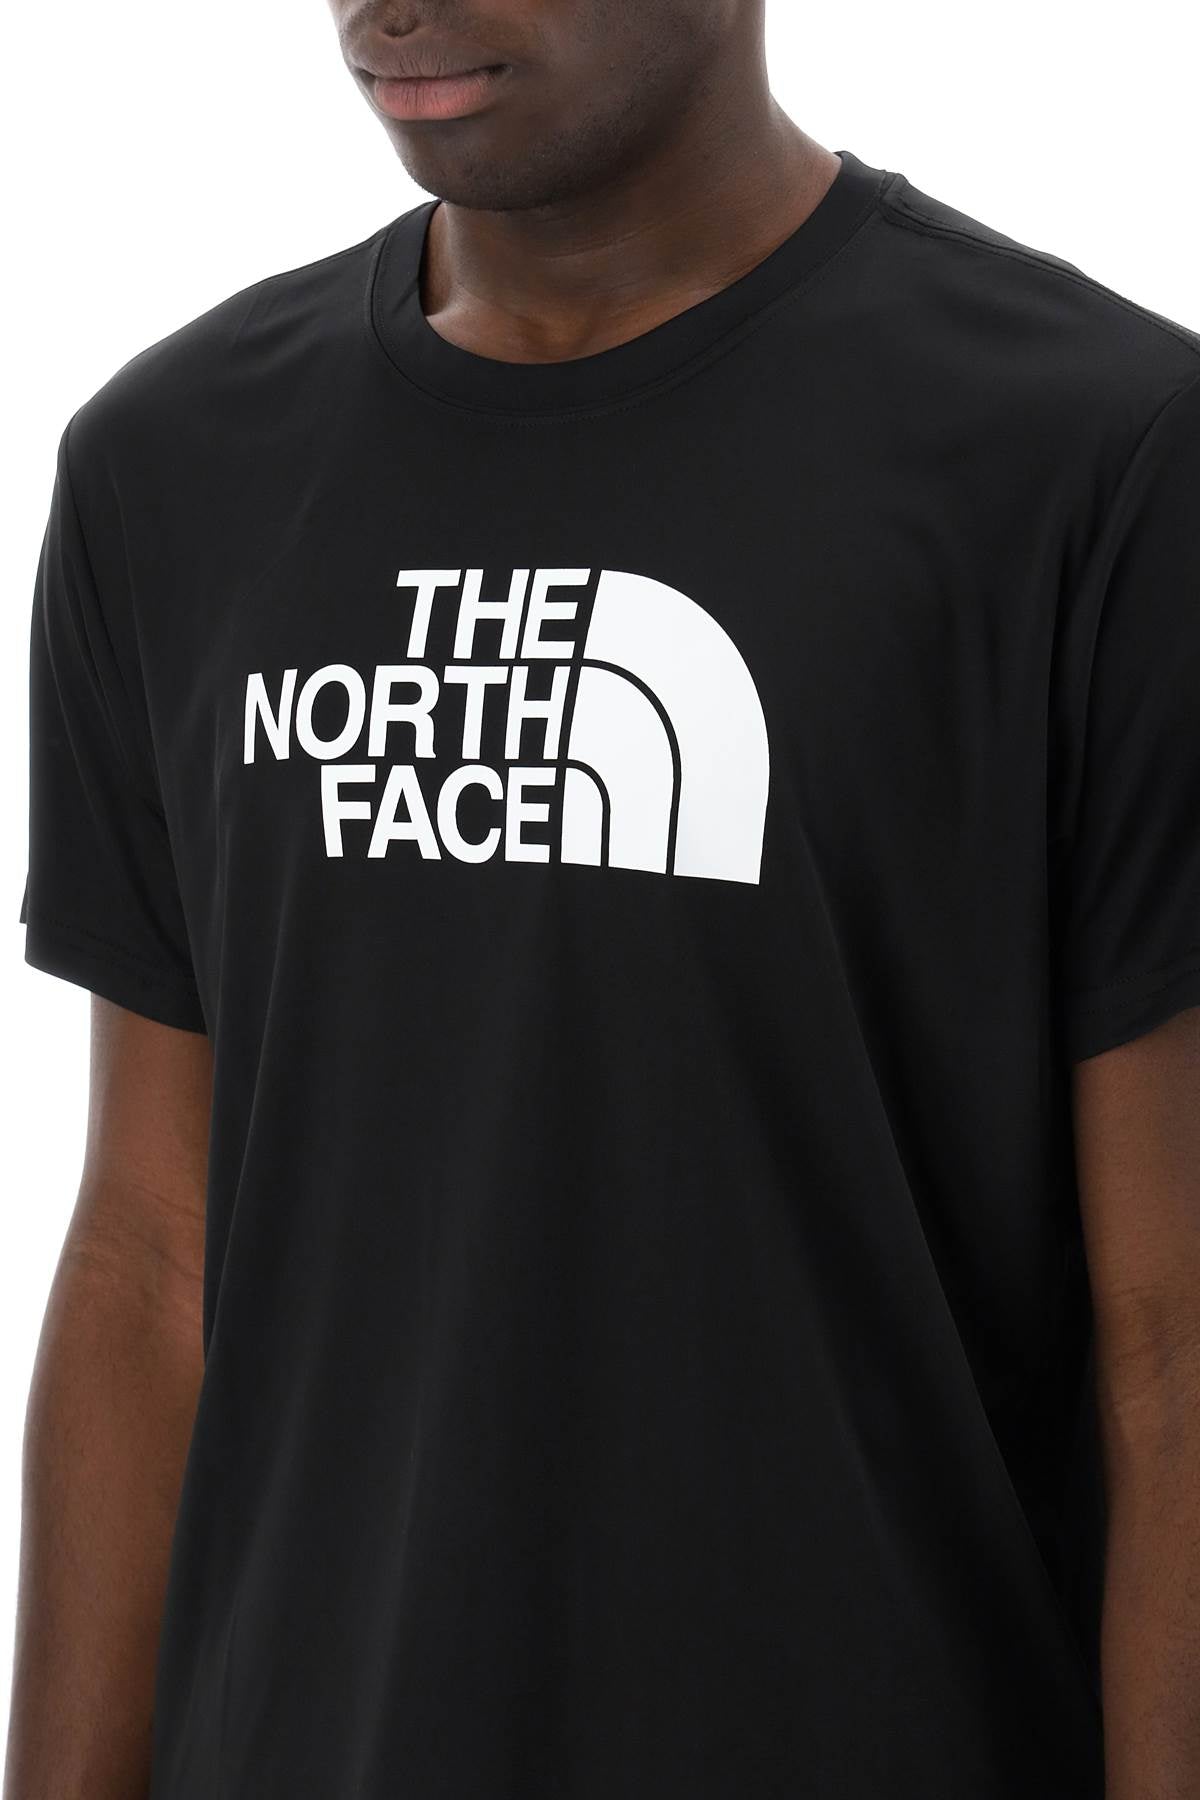 The north face care

easy care reax-3